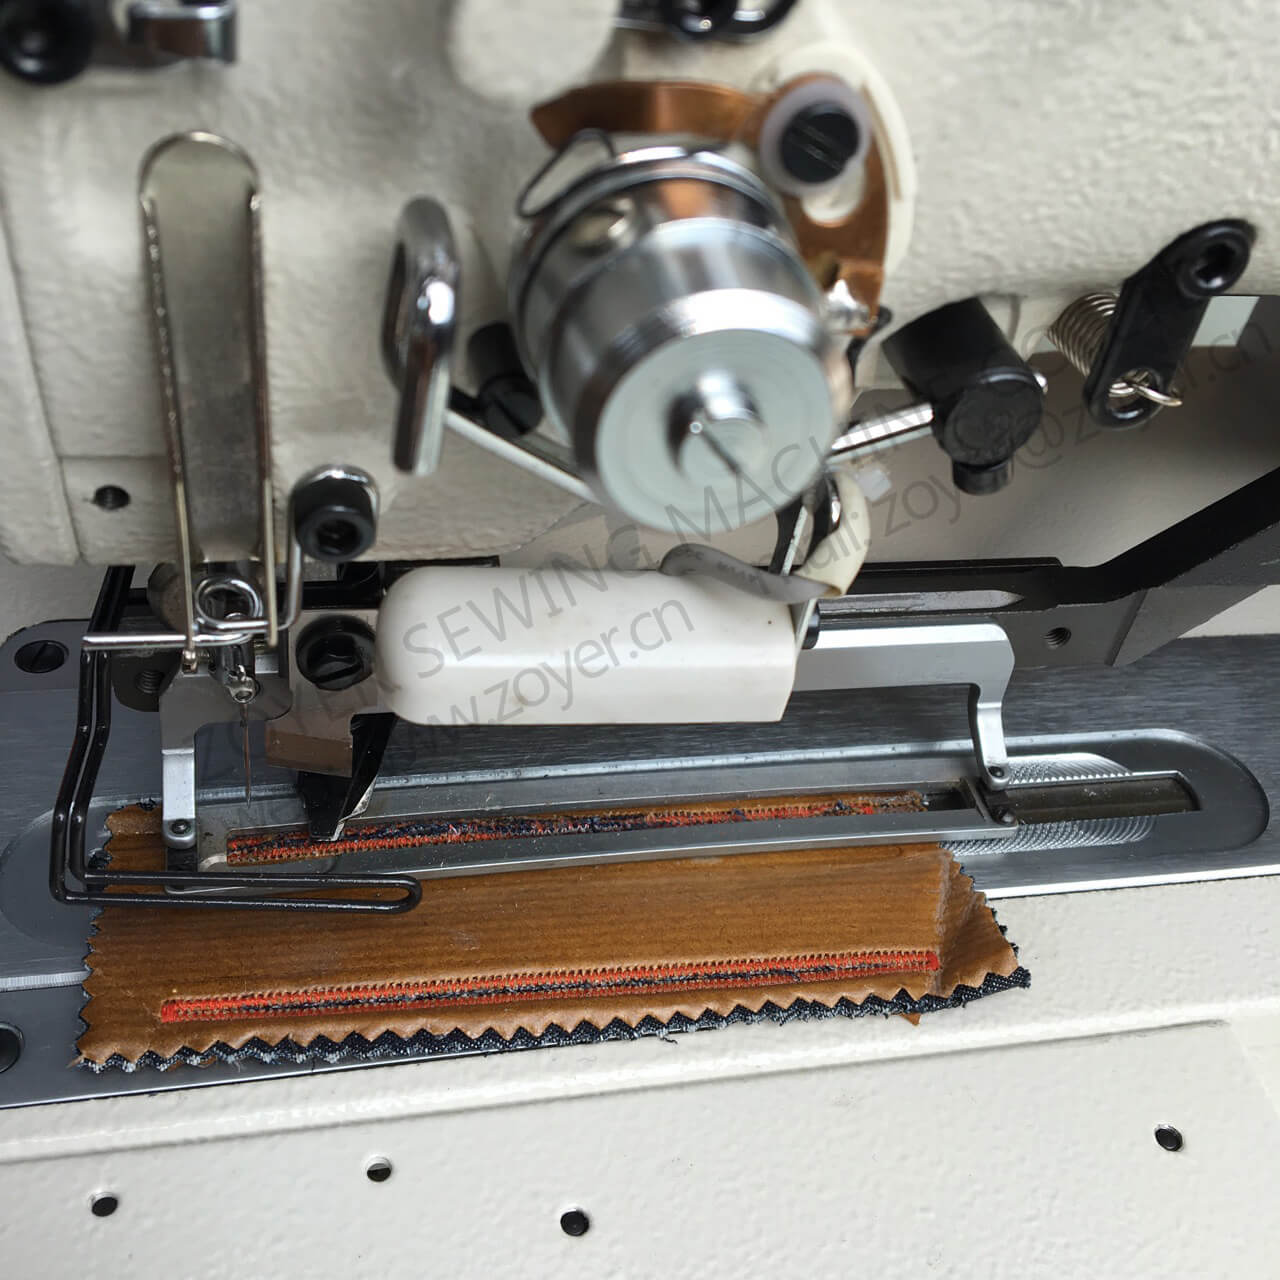 ZY1790 zoyer High speed lockstitch straight button holing sewing machine